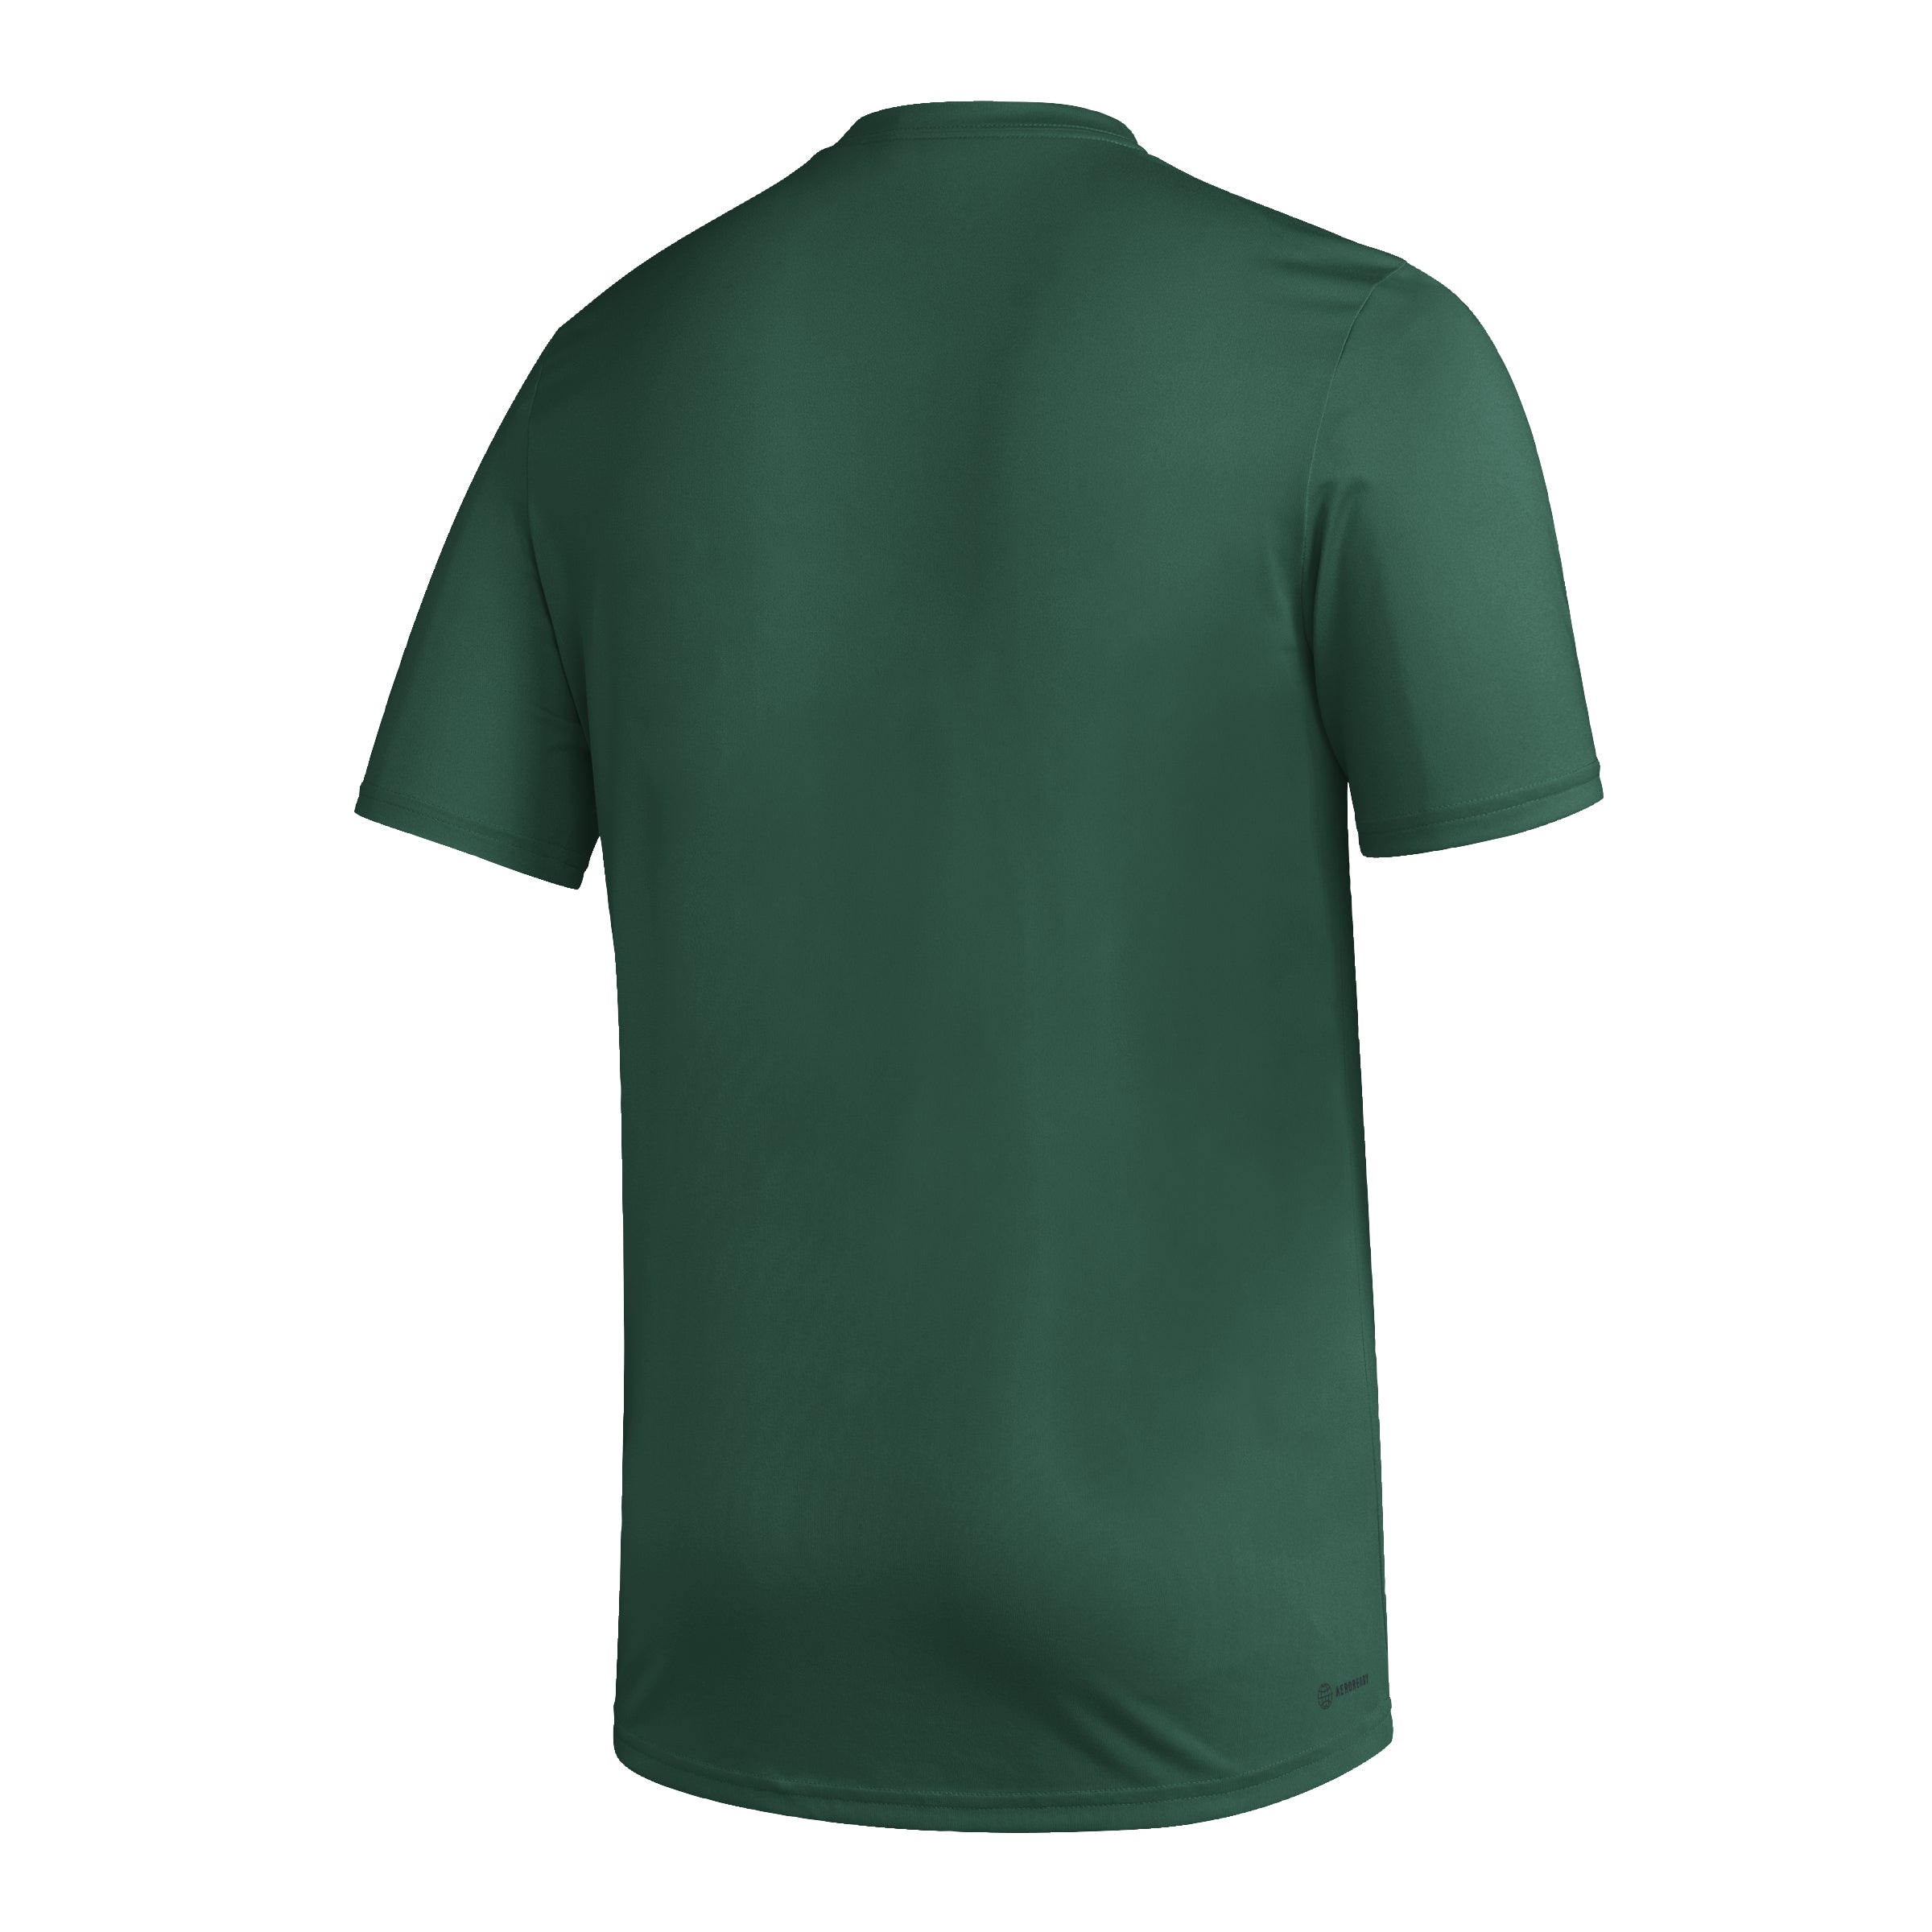 Miami Hurricanes adidas Basketball Pregame T-Shirt - Green